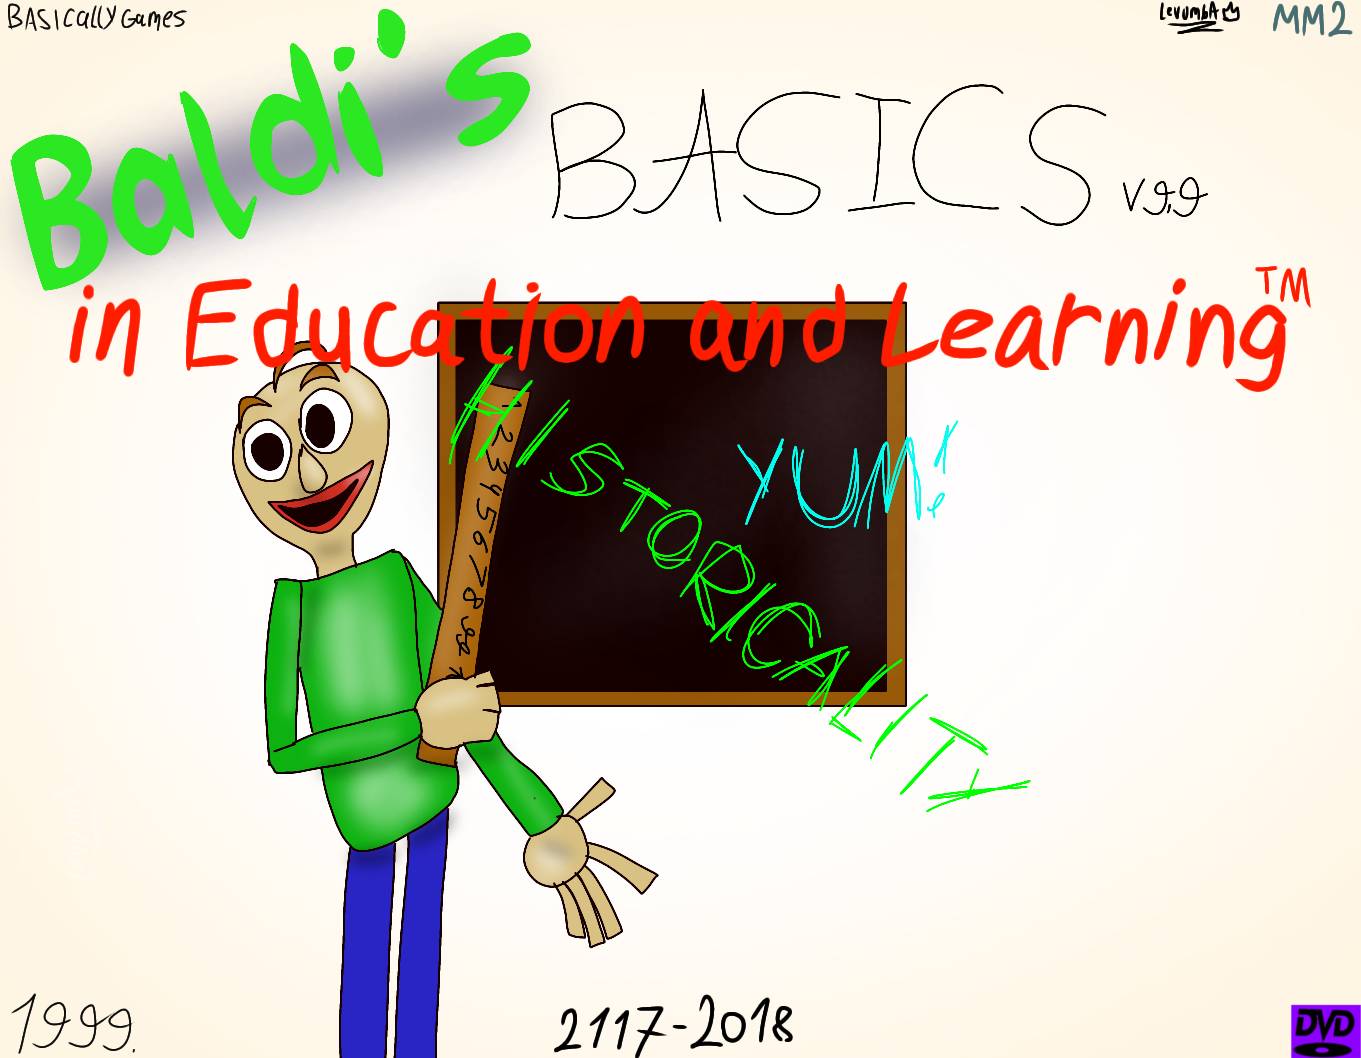 Basically Games - Developer of Baldi's Basics